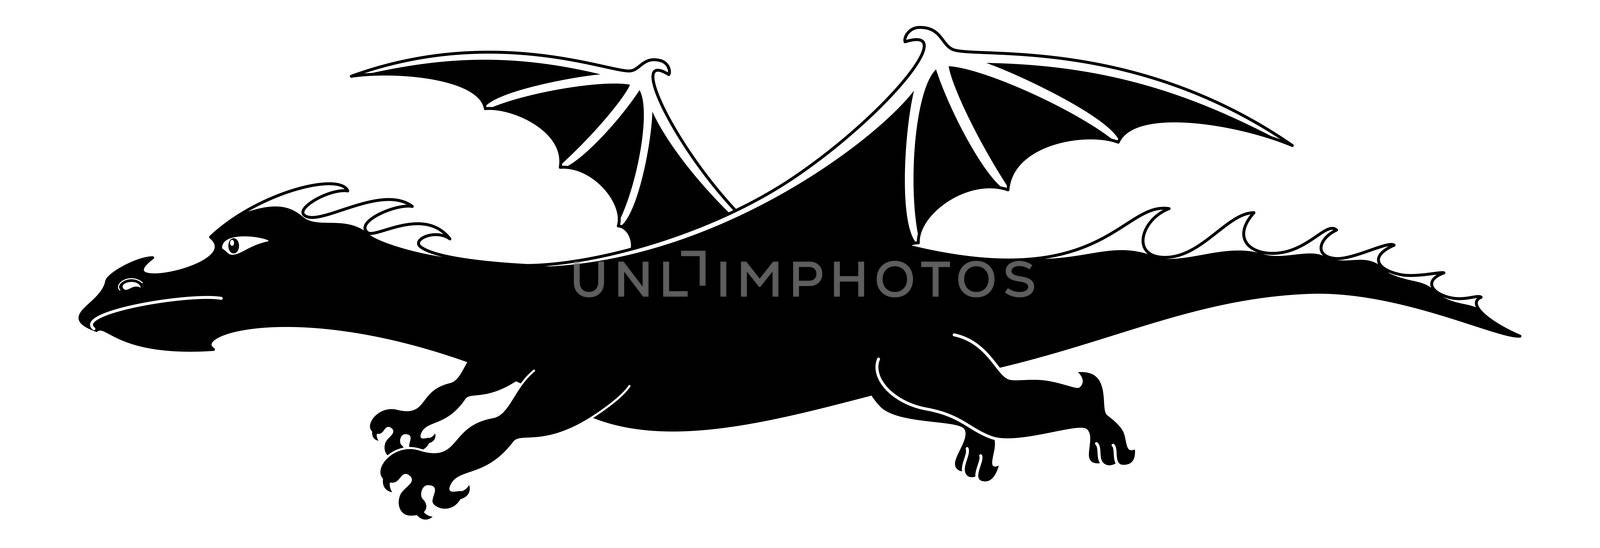 Cartoon dragon, silhouette by alexcoolok